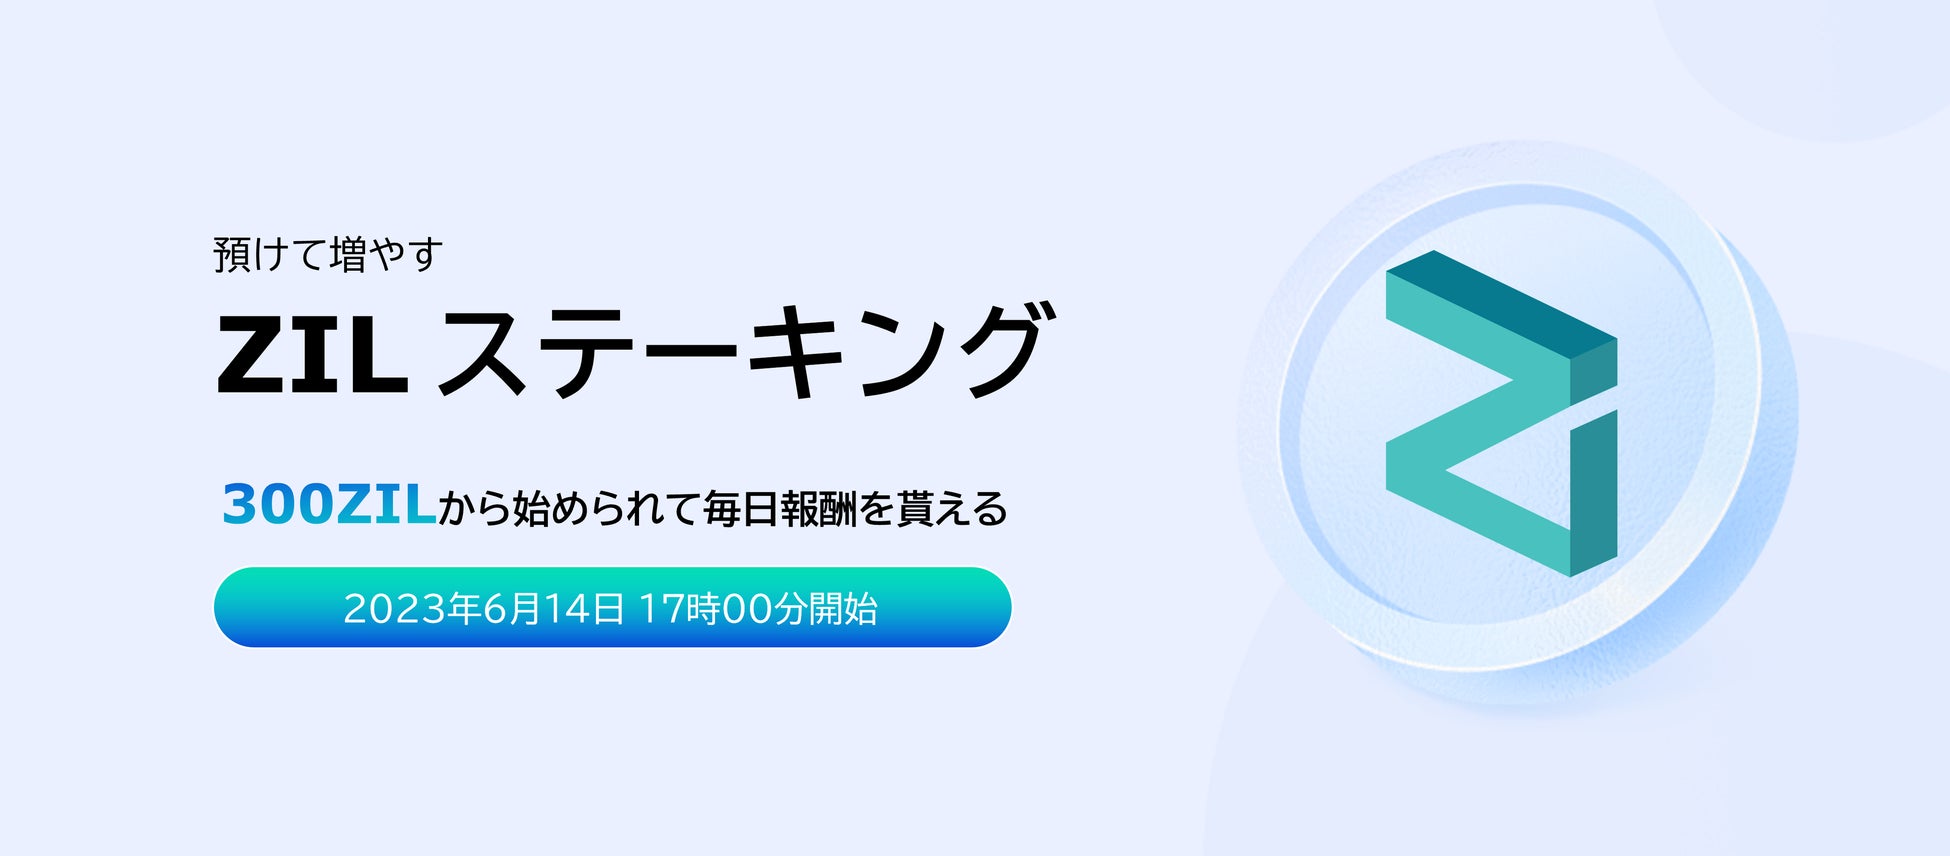 Money Forward X、秋田銀行を通じて業務DXサービス『Mikatano』シリーズを提供